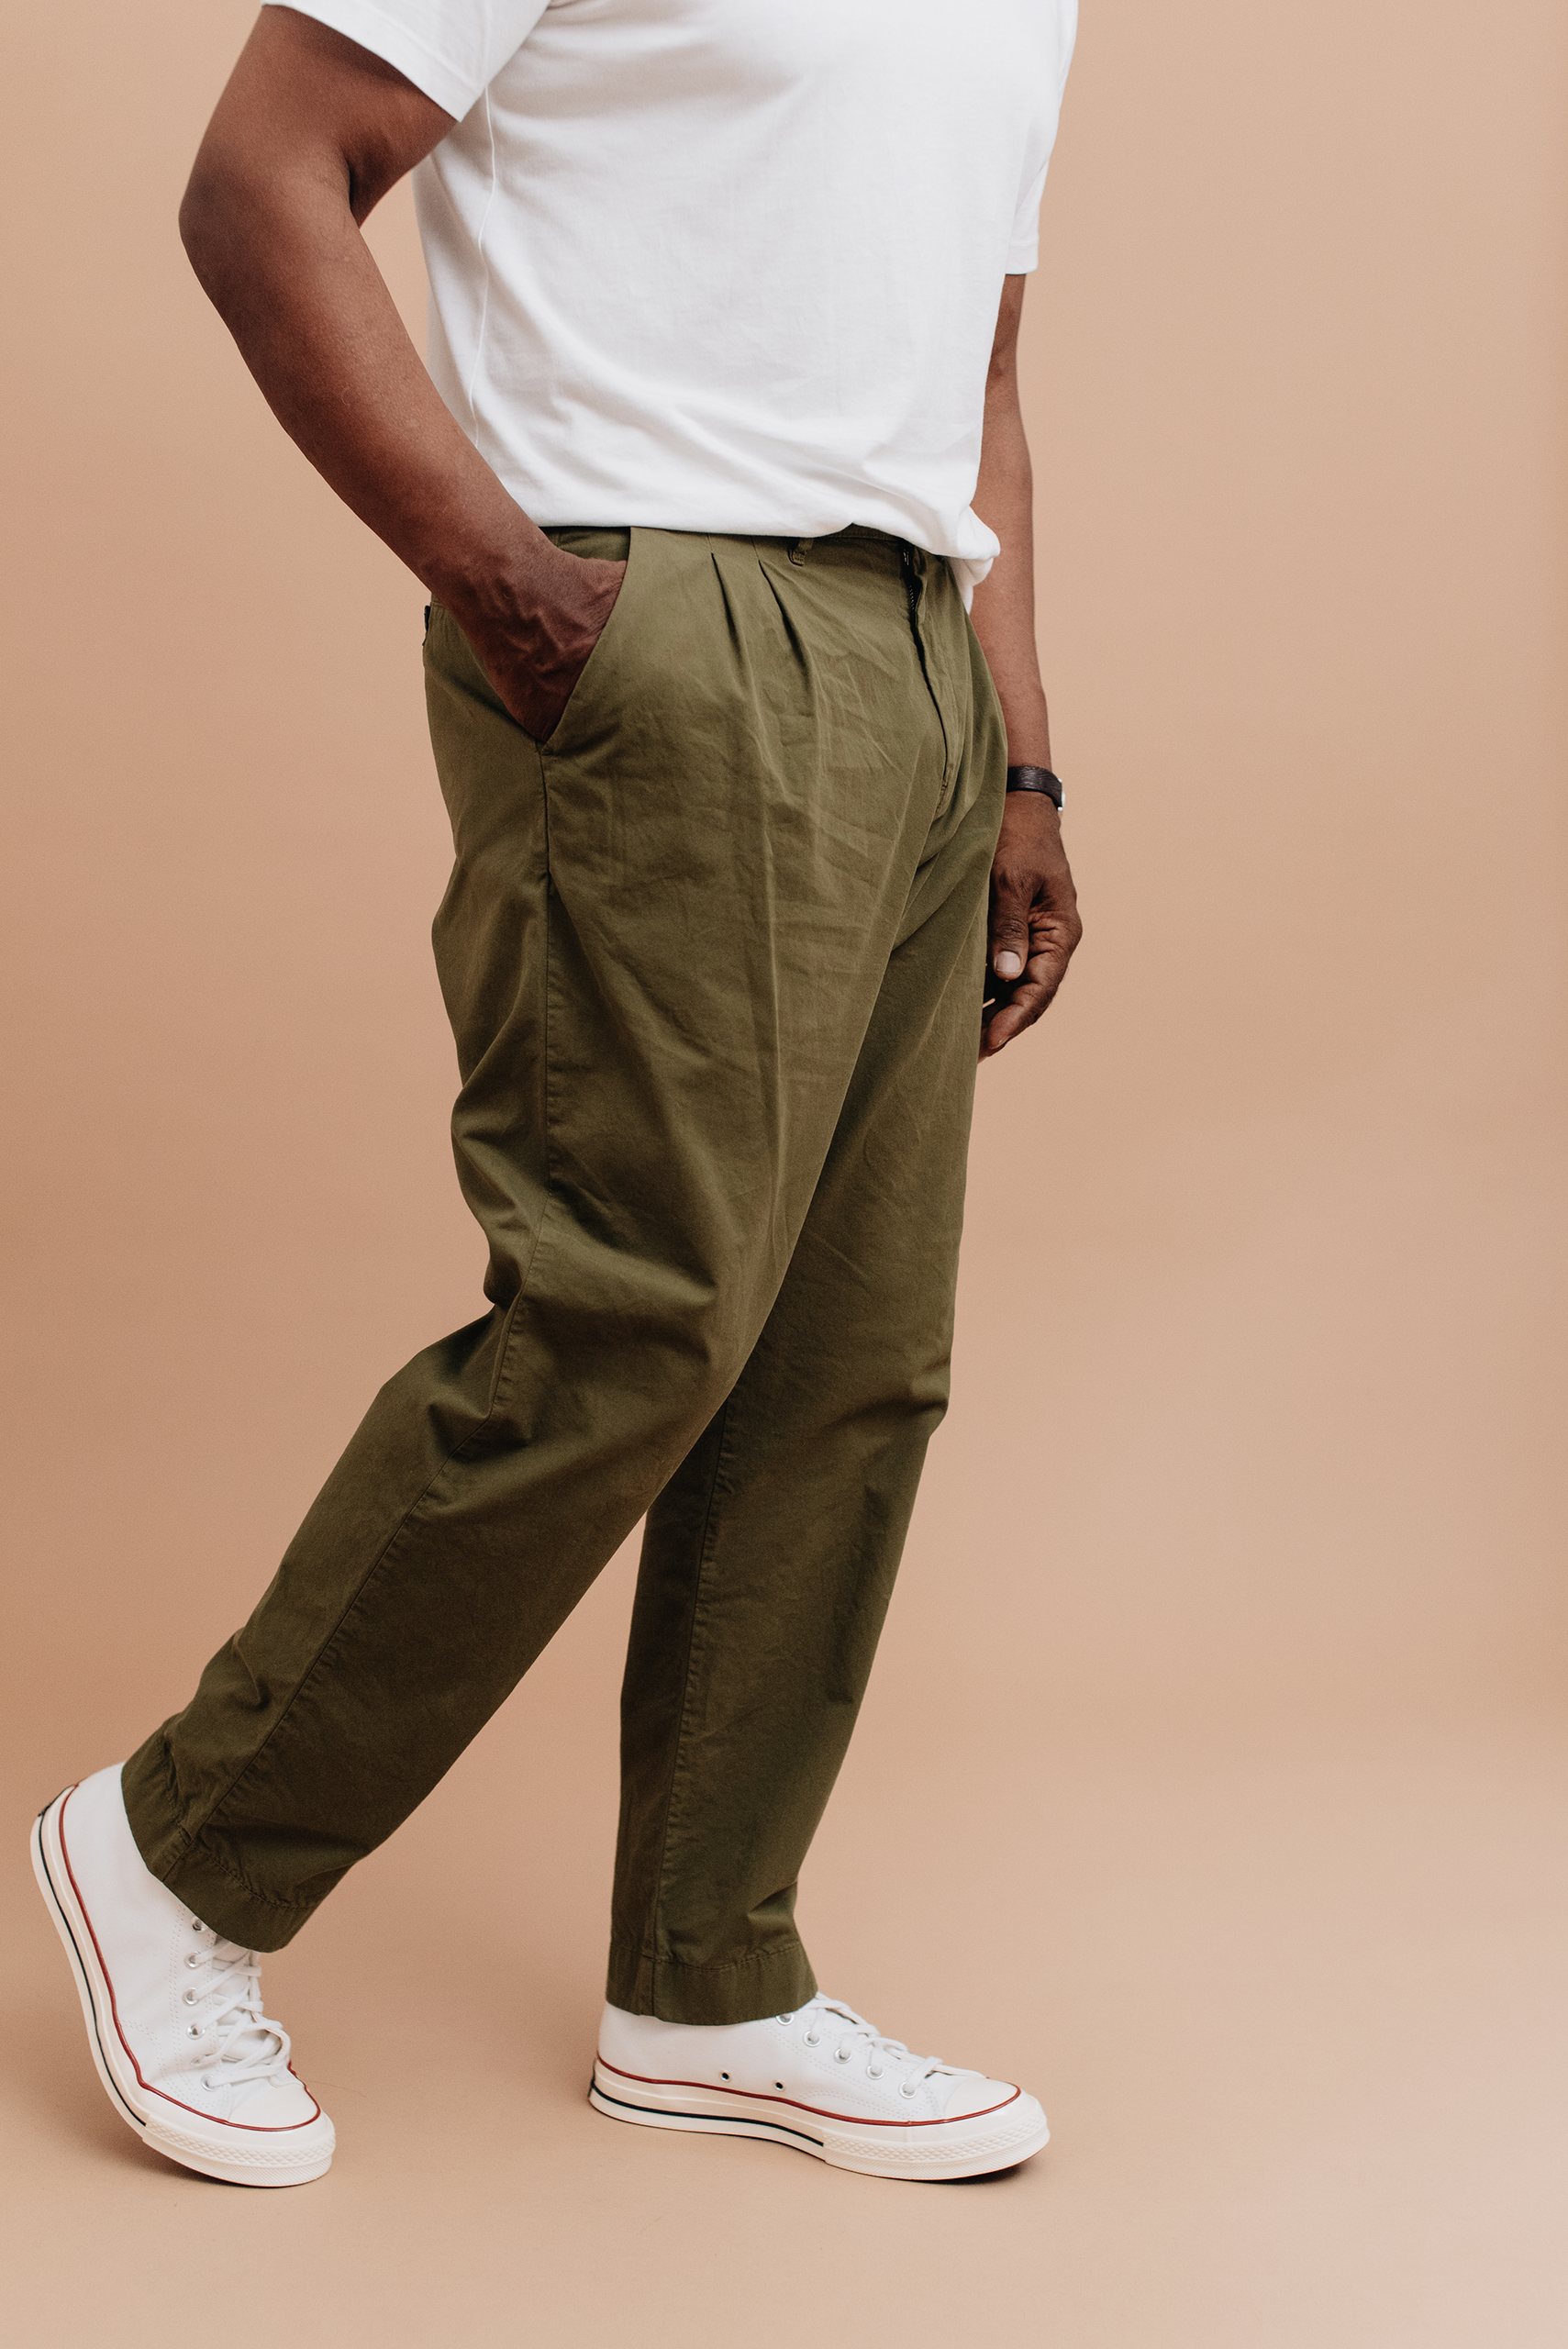 Buy Khaki Trousers  Pants for Women by PROJECT EVE Online  Ajiocom